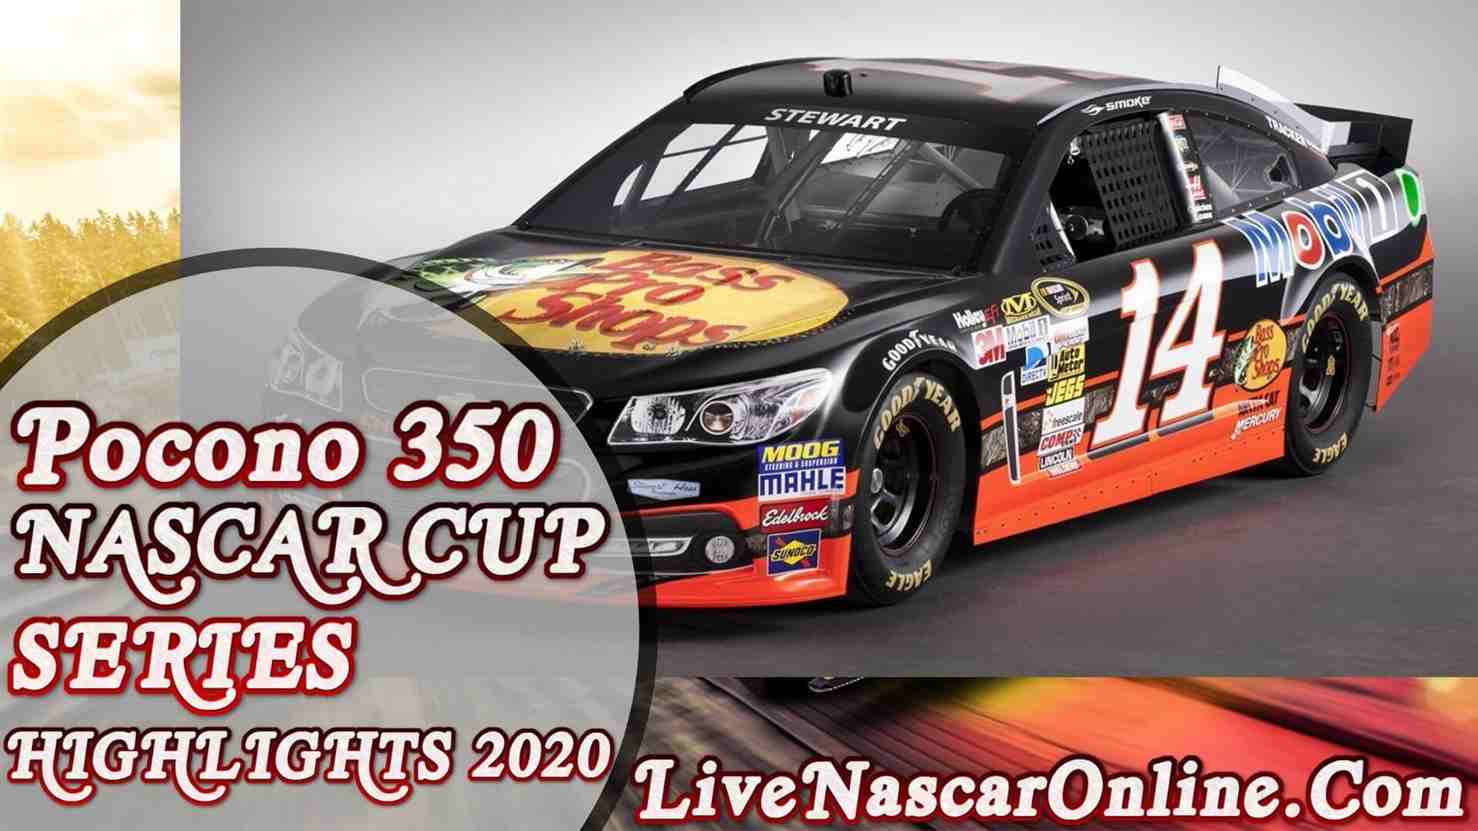 Pocono 350 NASCAR Cup Series Highlights 2020